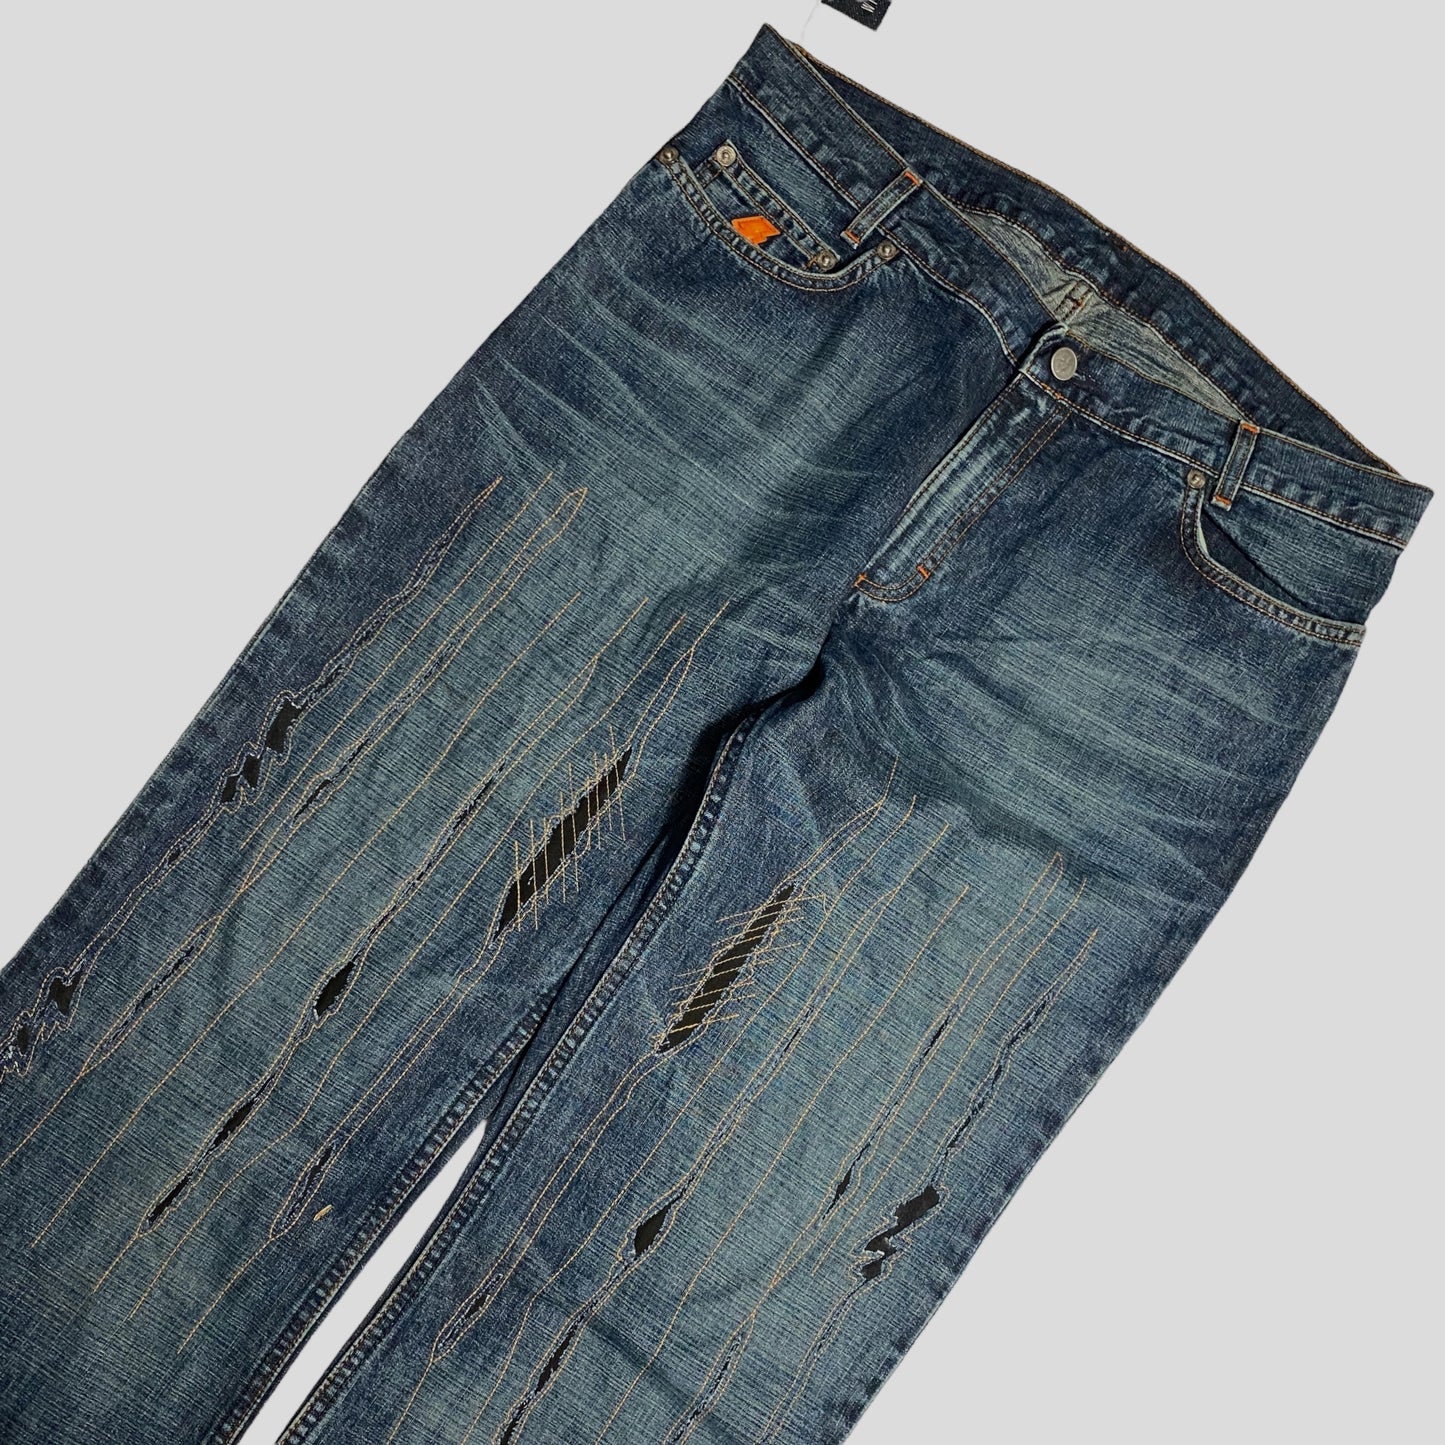 W+LT 2003 Ripped Effect Jeans - 32-33